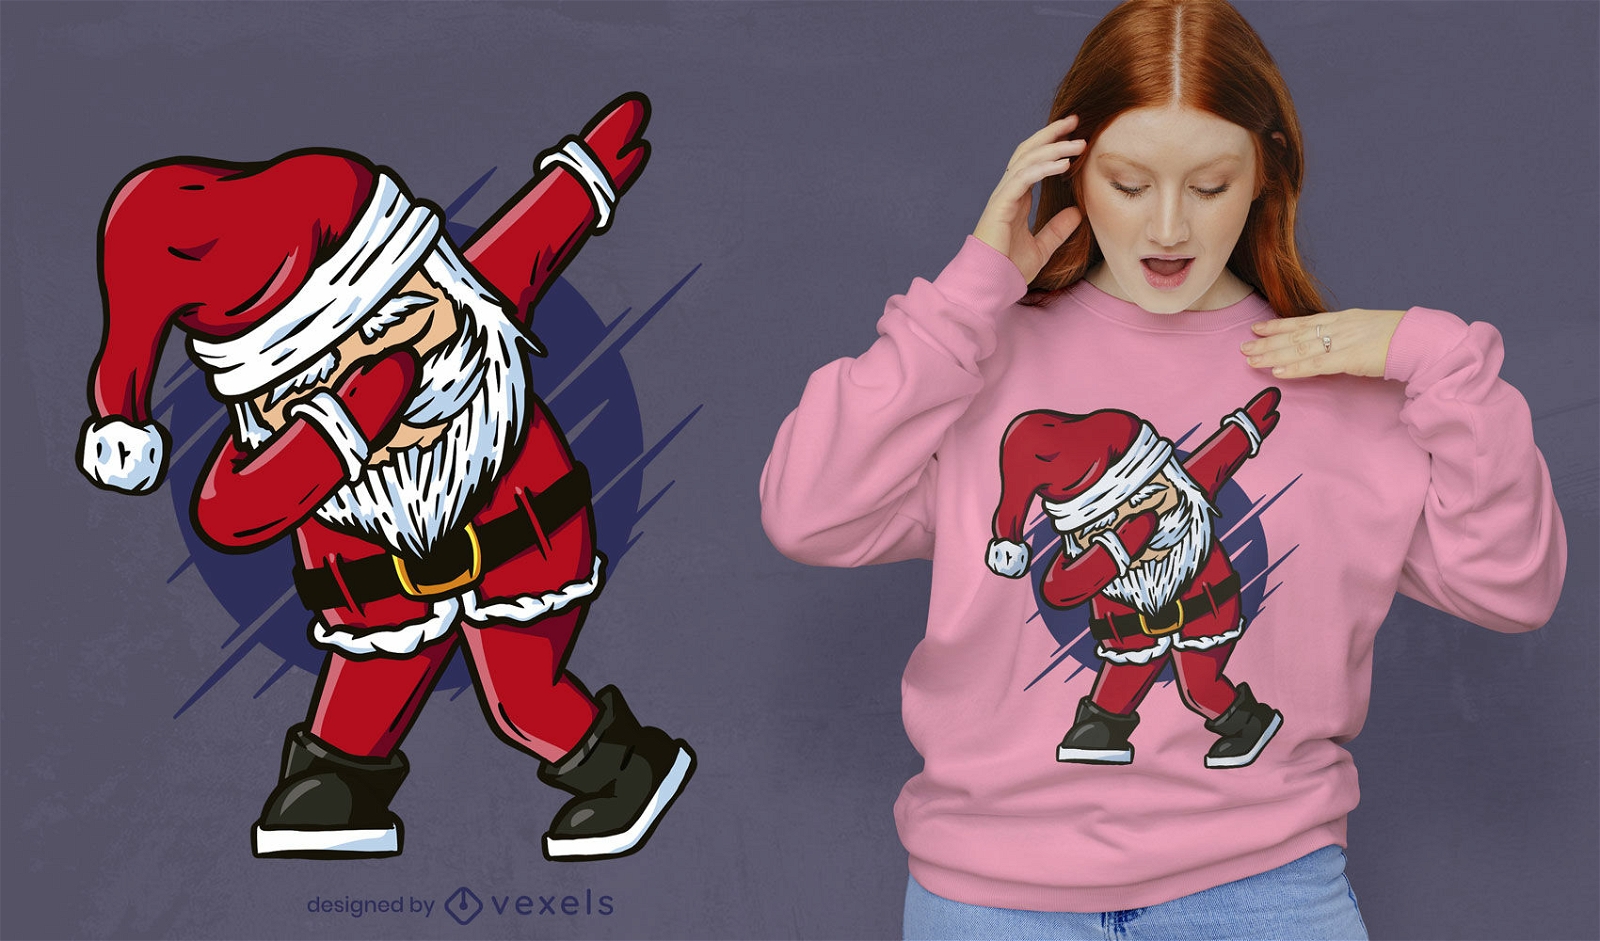 Funny dabbing Santa Claus t-shirt design